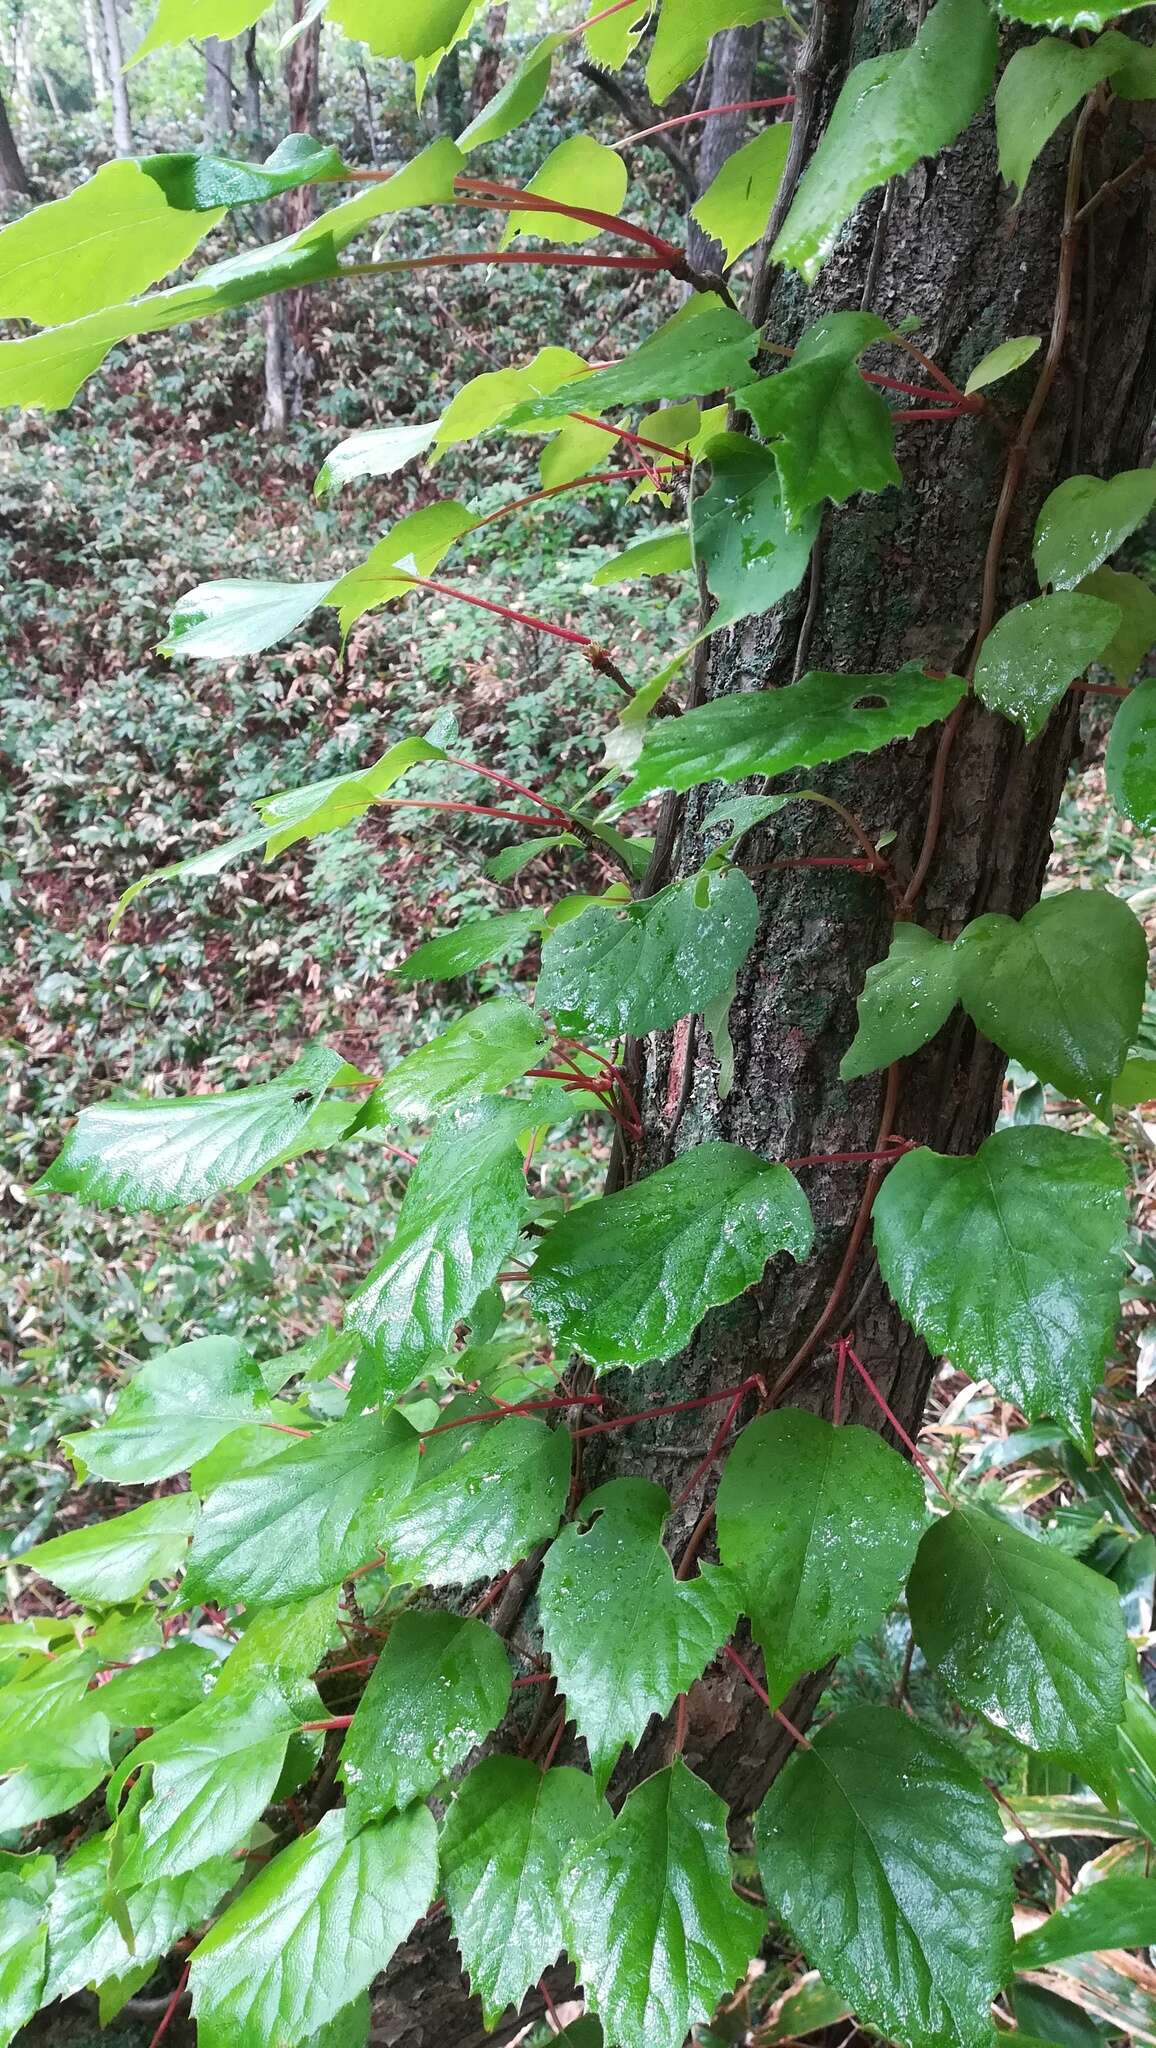 Image of Climbing hydrangea vine